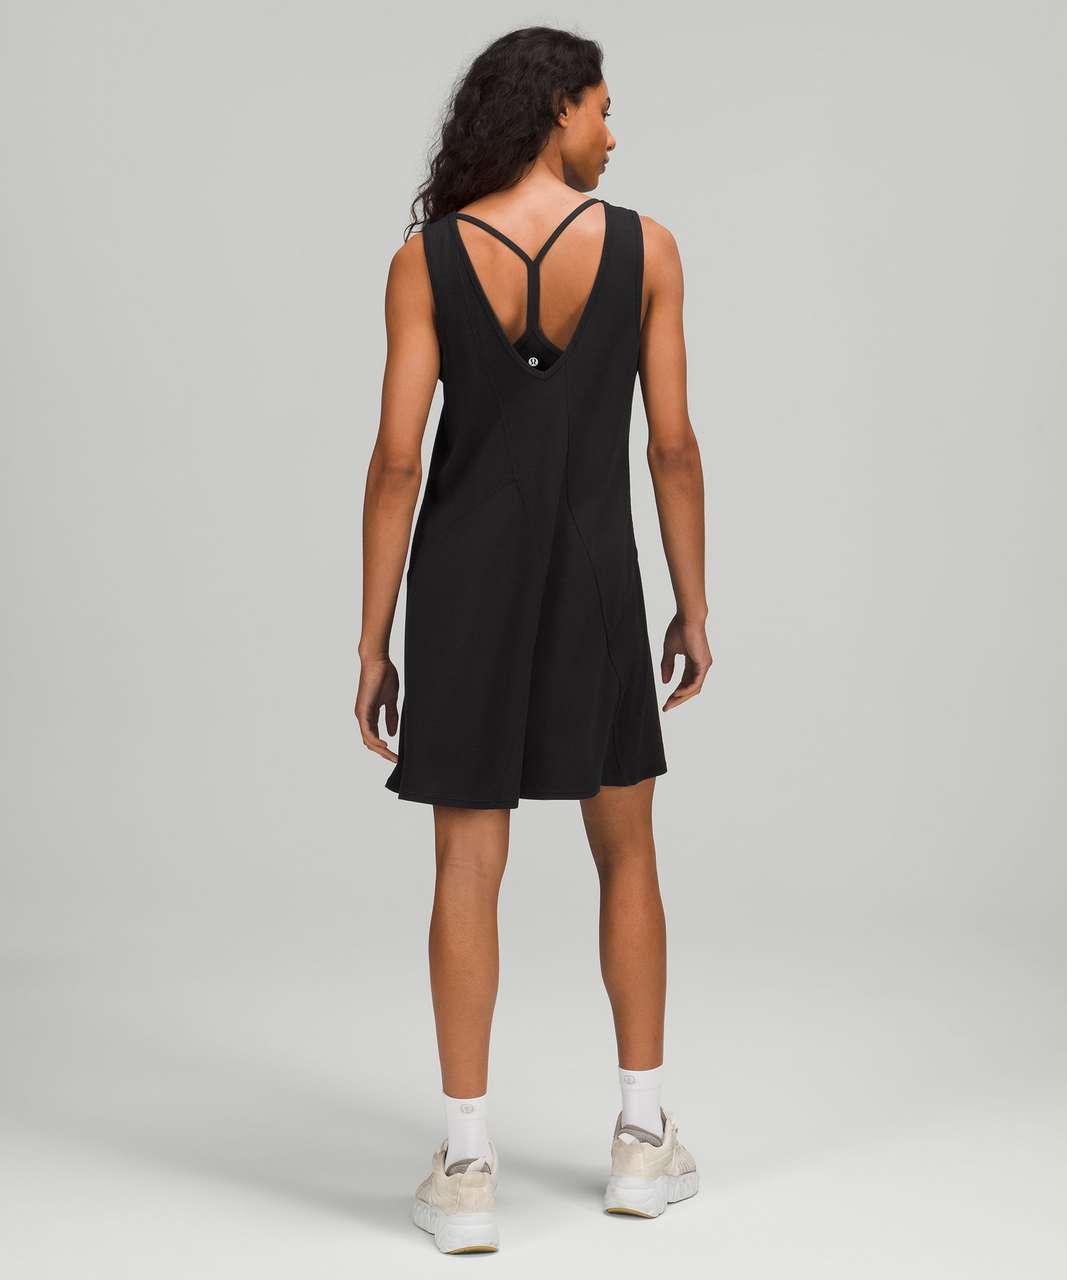 Lululemon Ribbed Modal-Cotton Dress - Black (First Release)